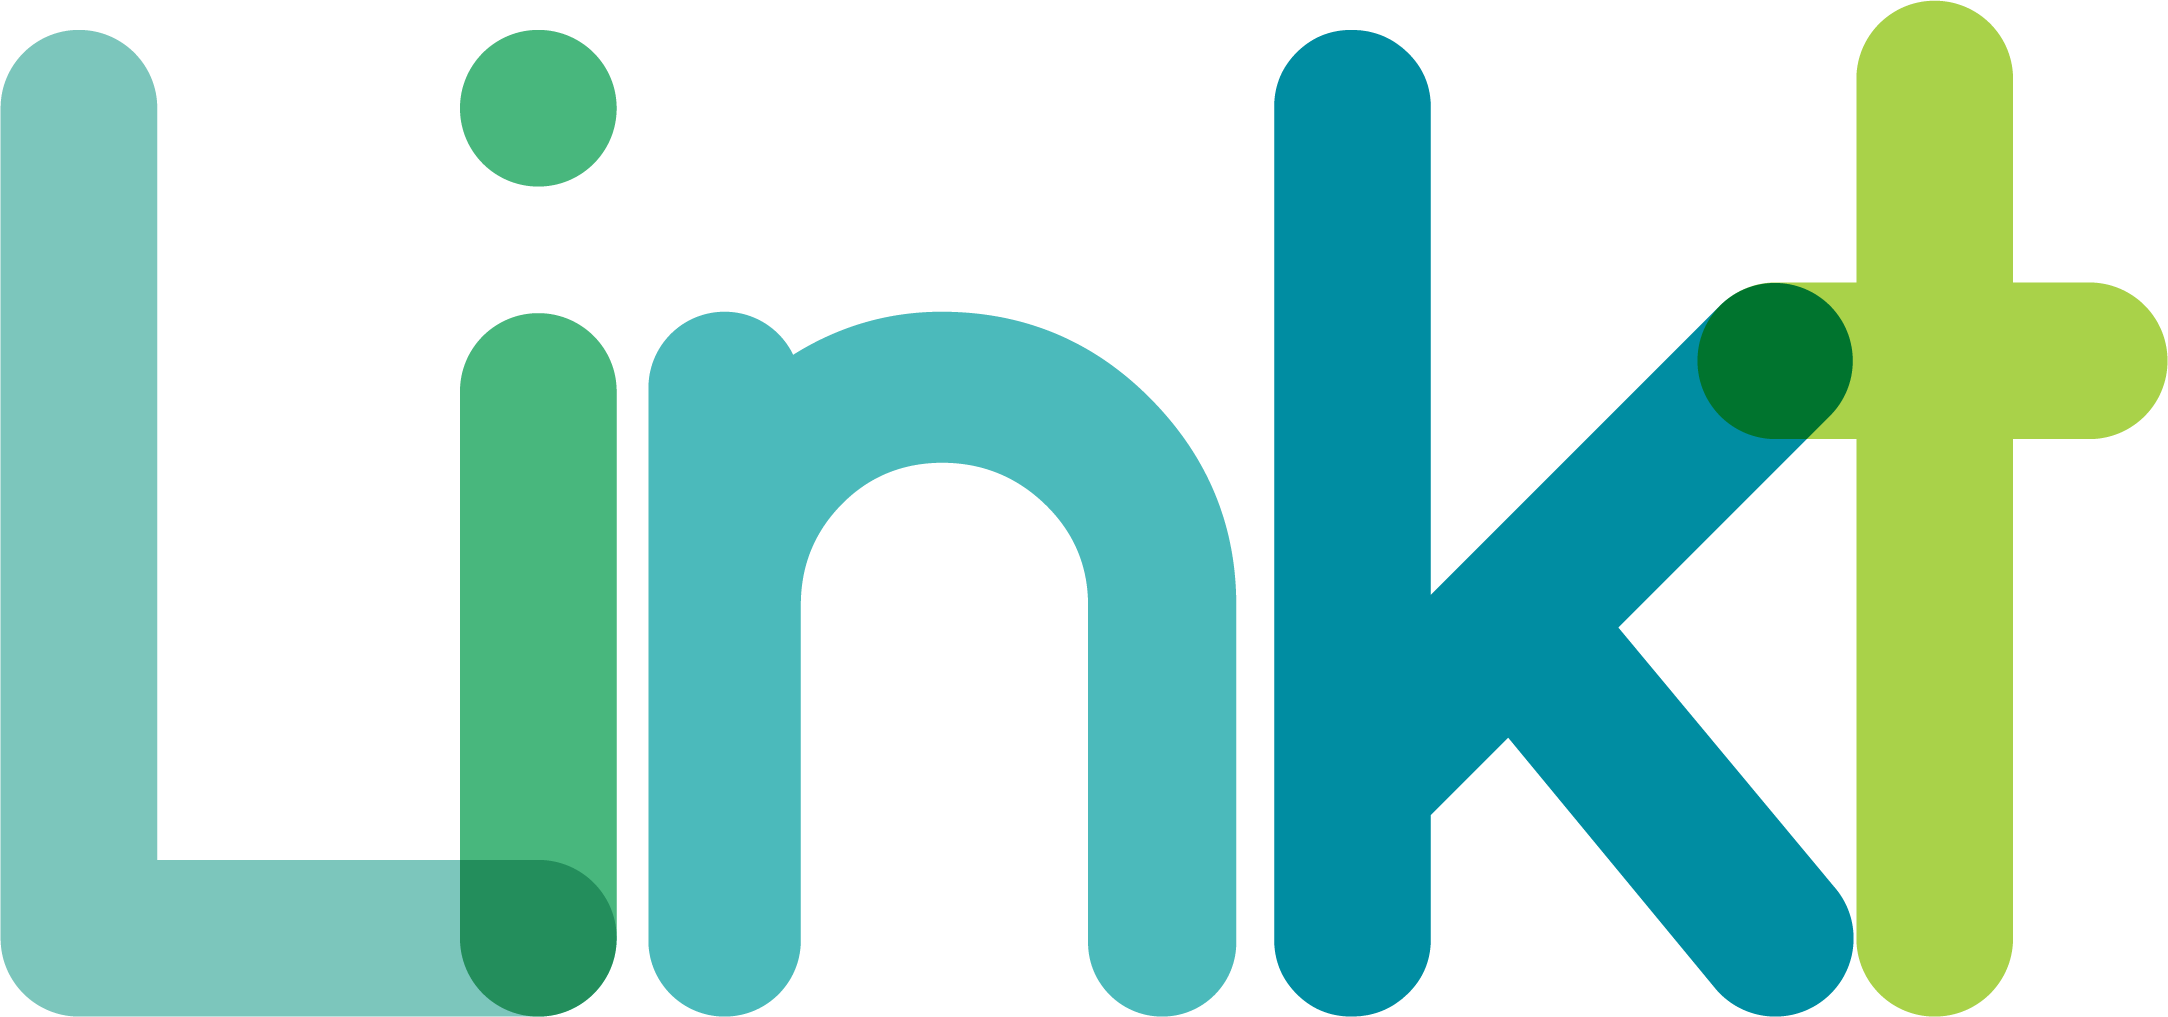 Logo Linkt